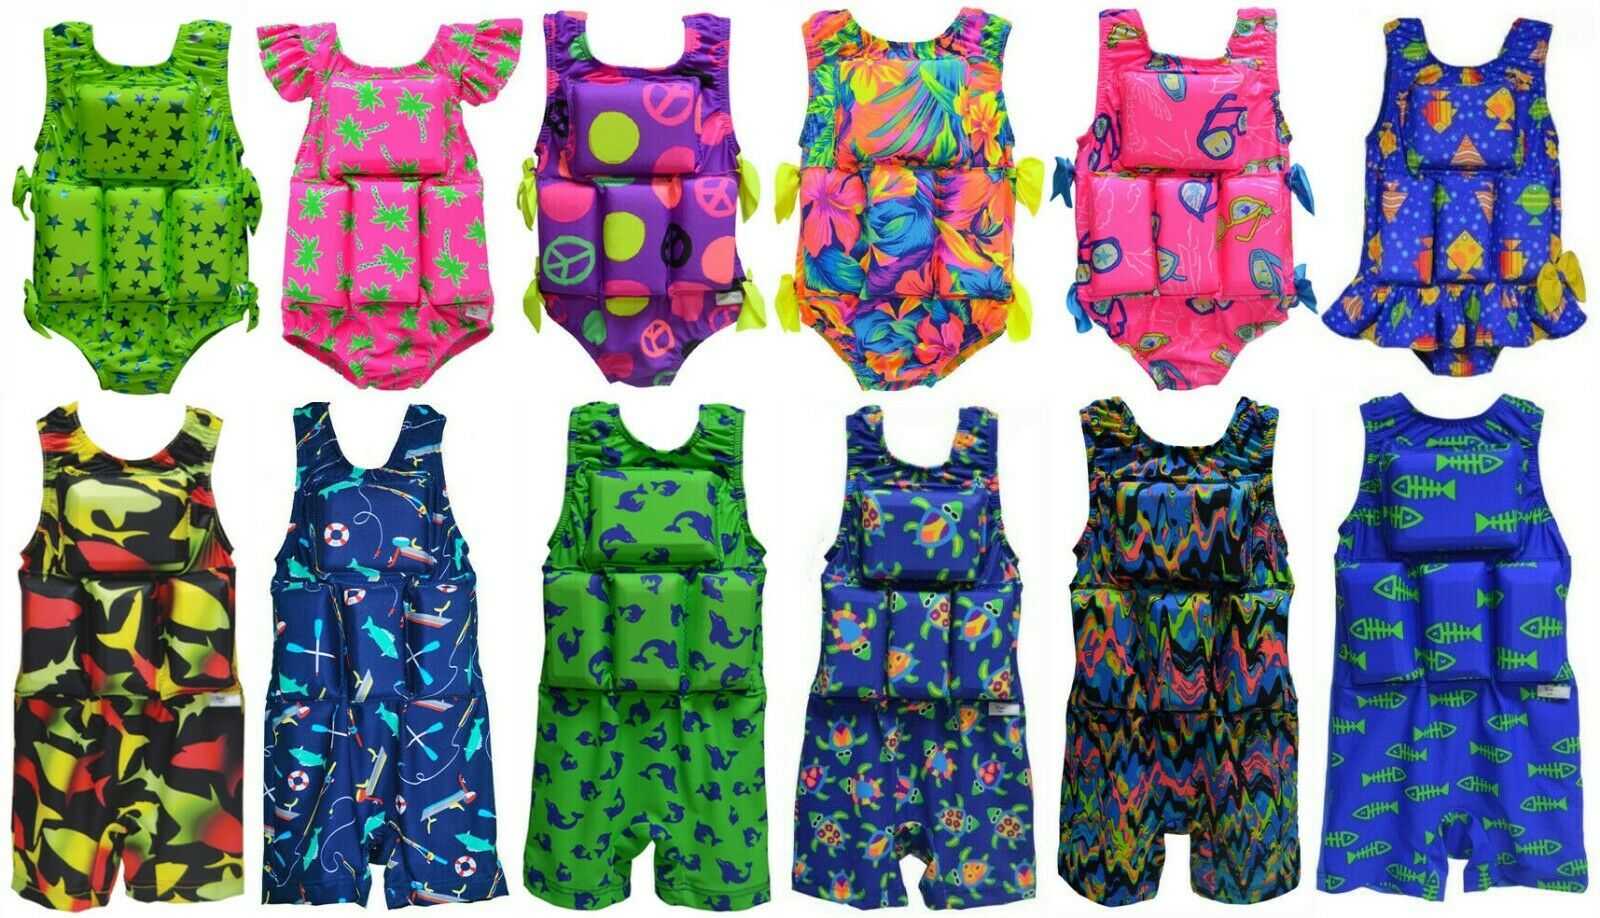 Girl's Or Boy's Children's Swimwear My Pool Pal Flotation Lifevest Swimsuit